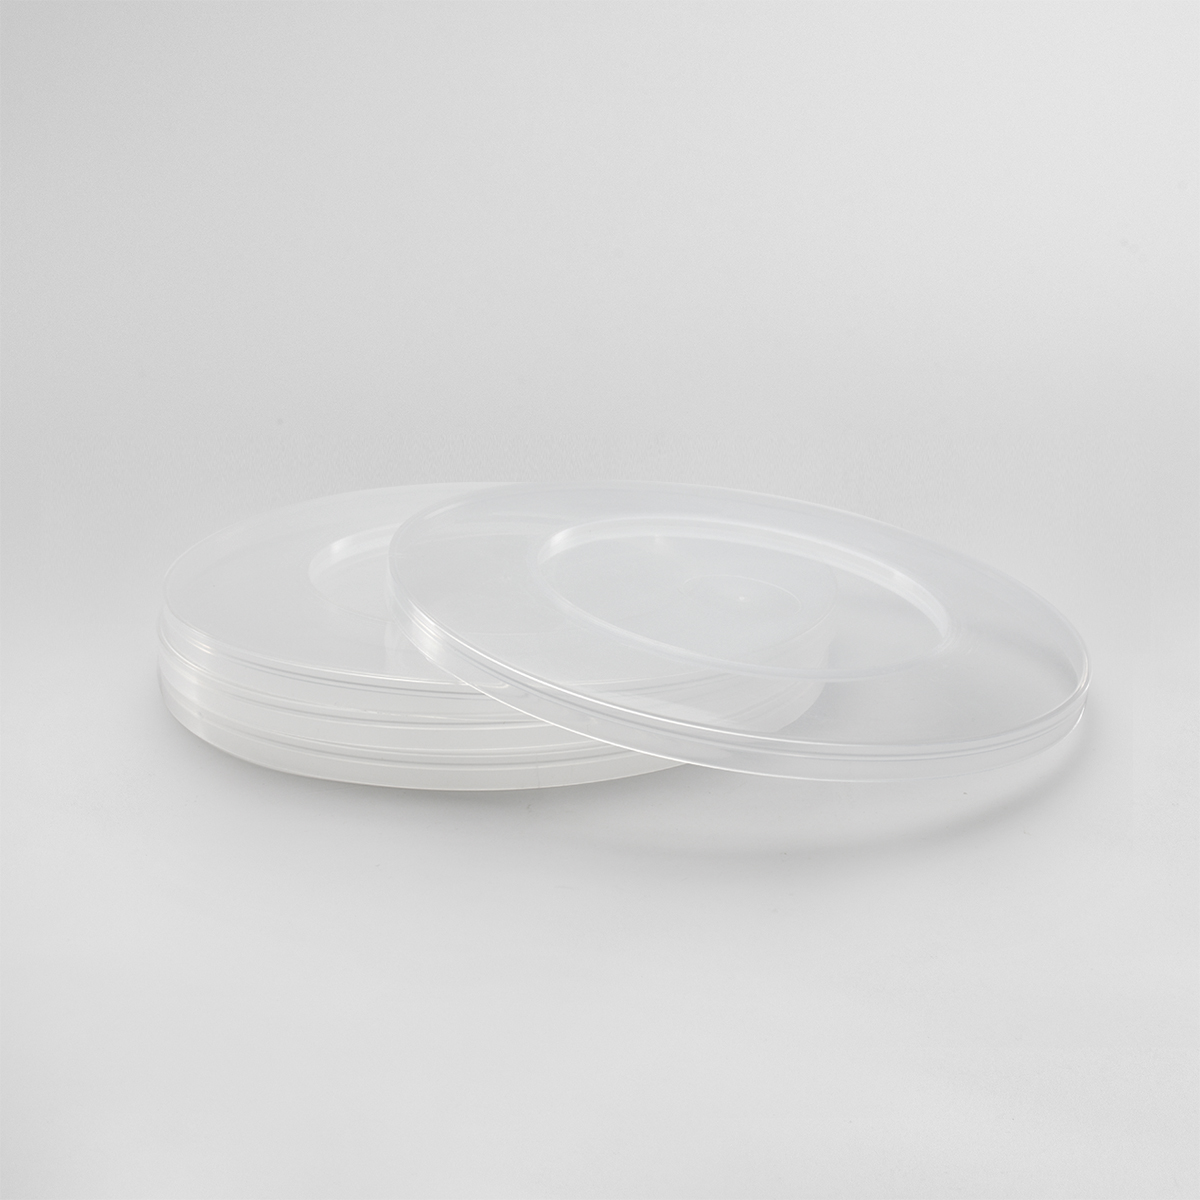 Transparent lid for a cup (50 pieces)